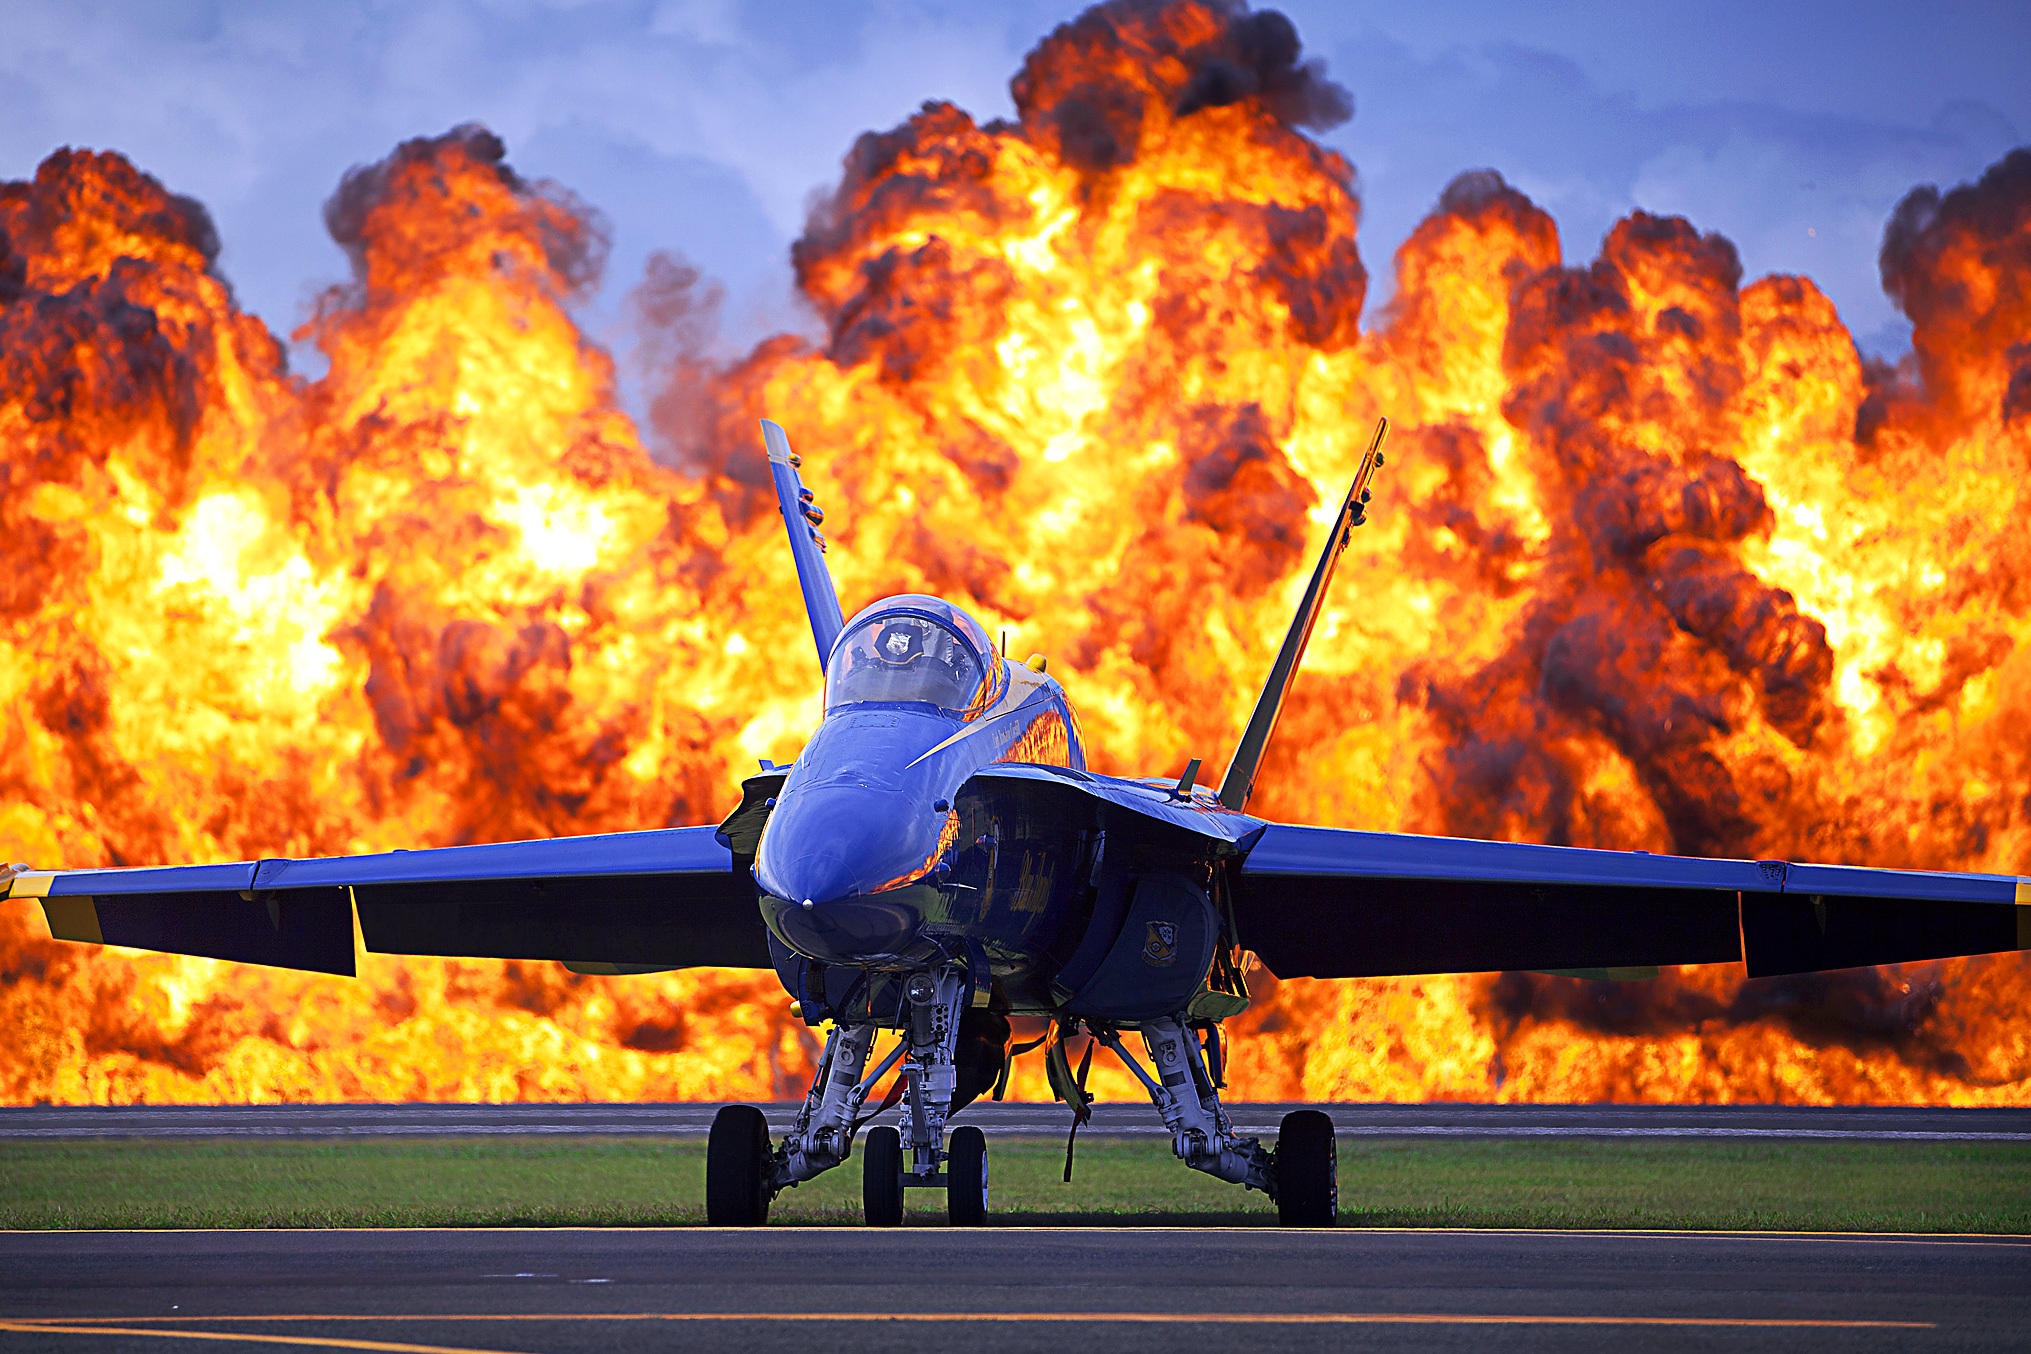 Blue Angels Jet, Aircraft, Blue, Burning, Fire, HQ Photo